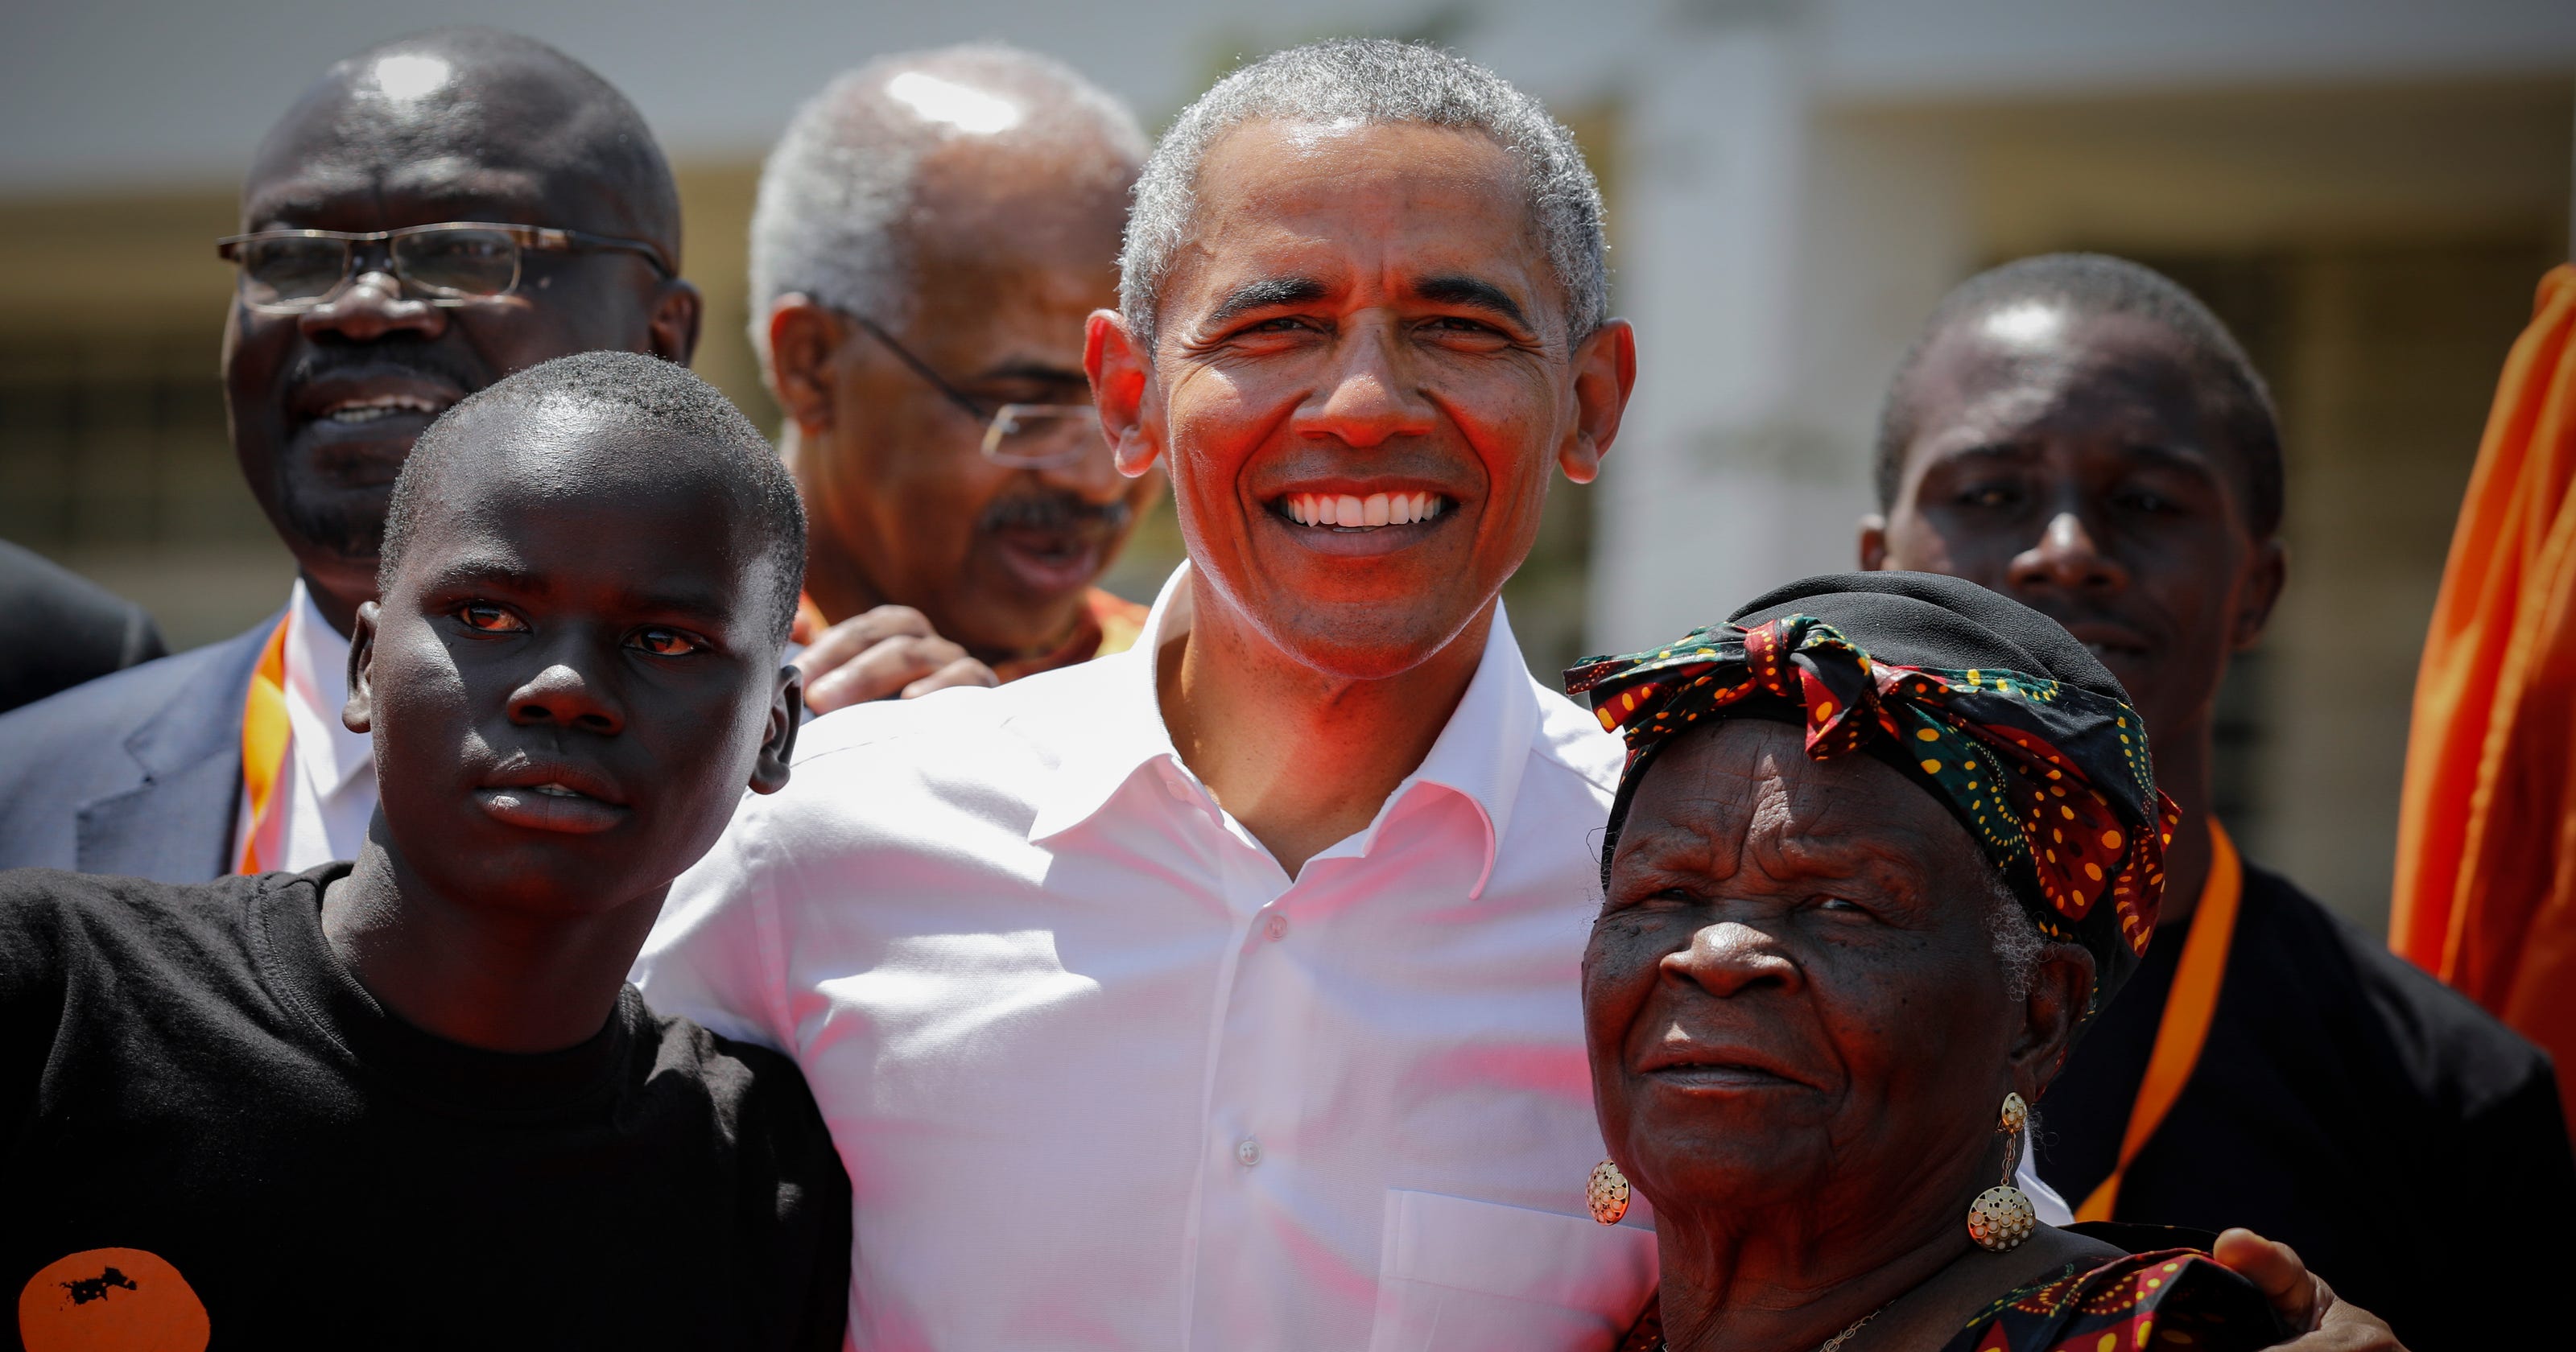 obama last visit to kenya